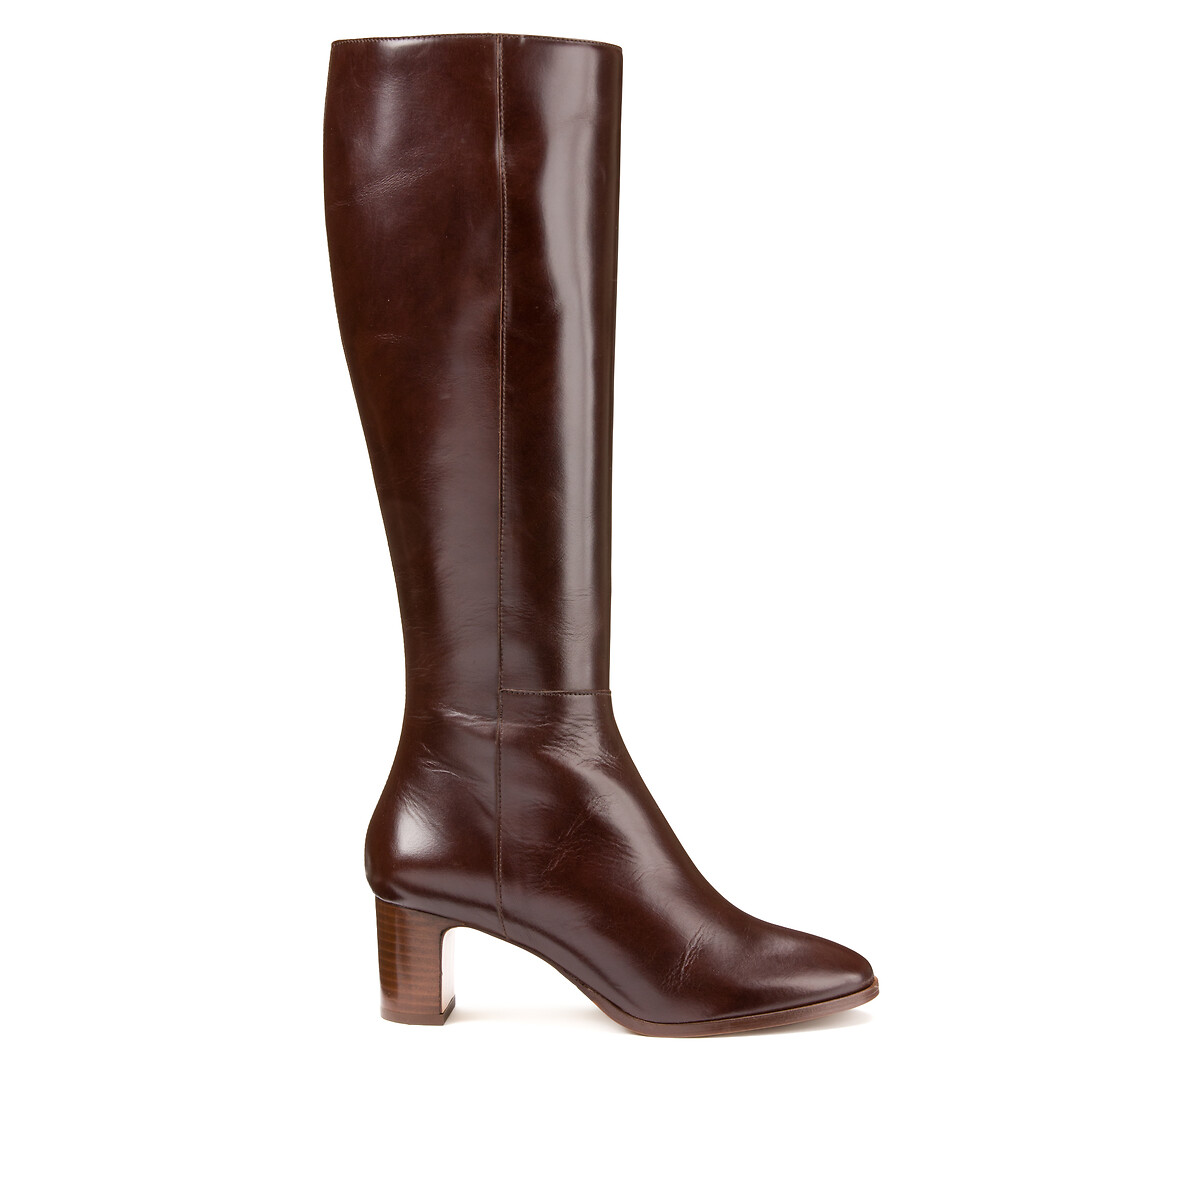 Ndeg291 Leather Calf Boots with Heel